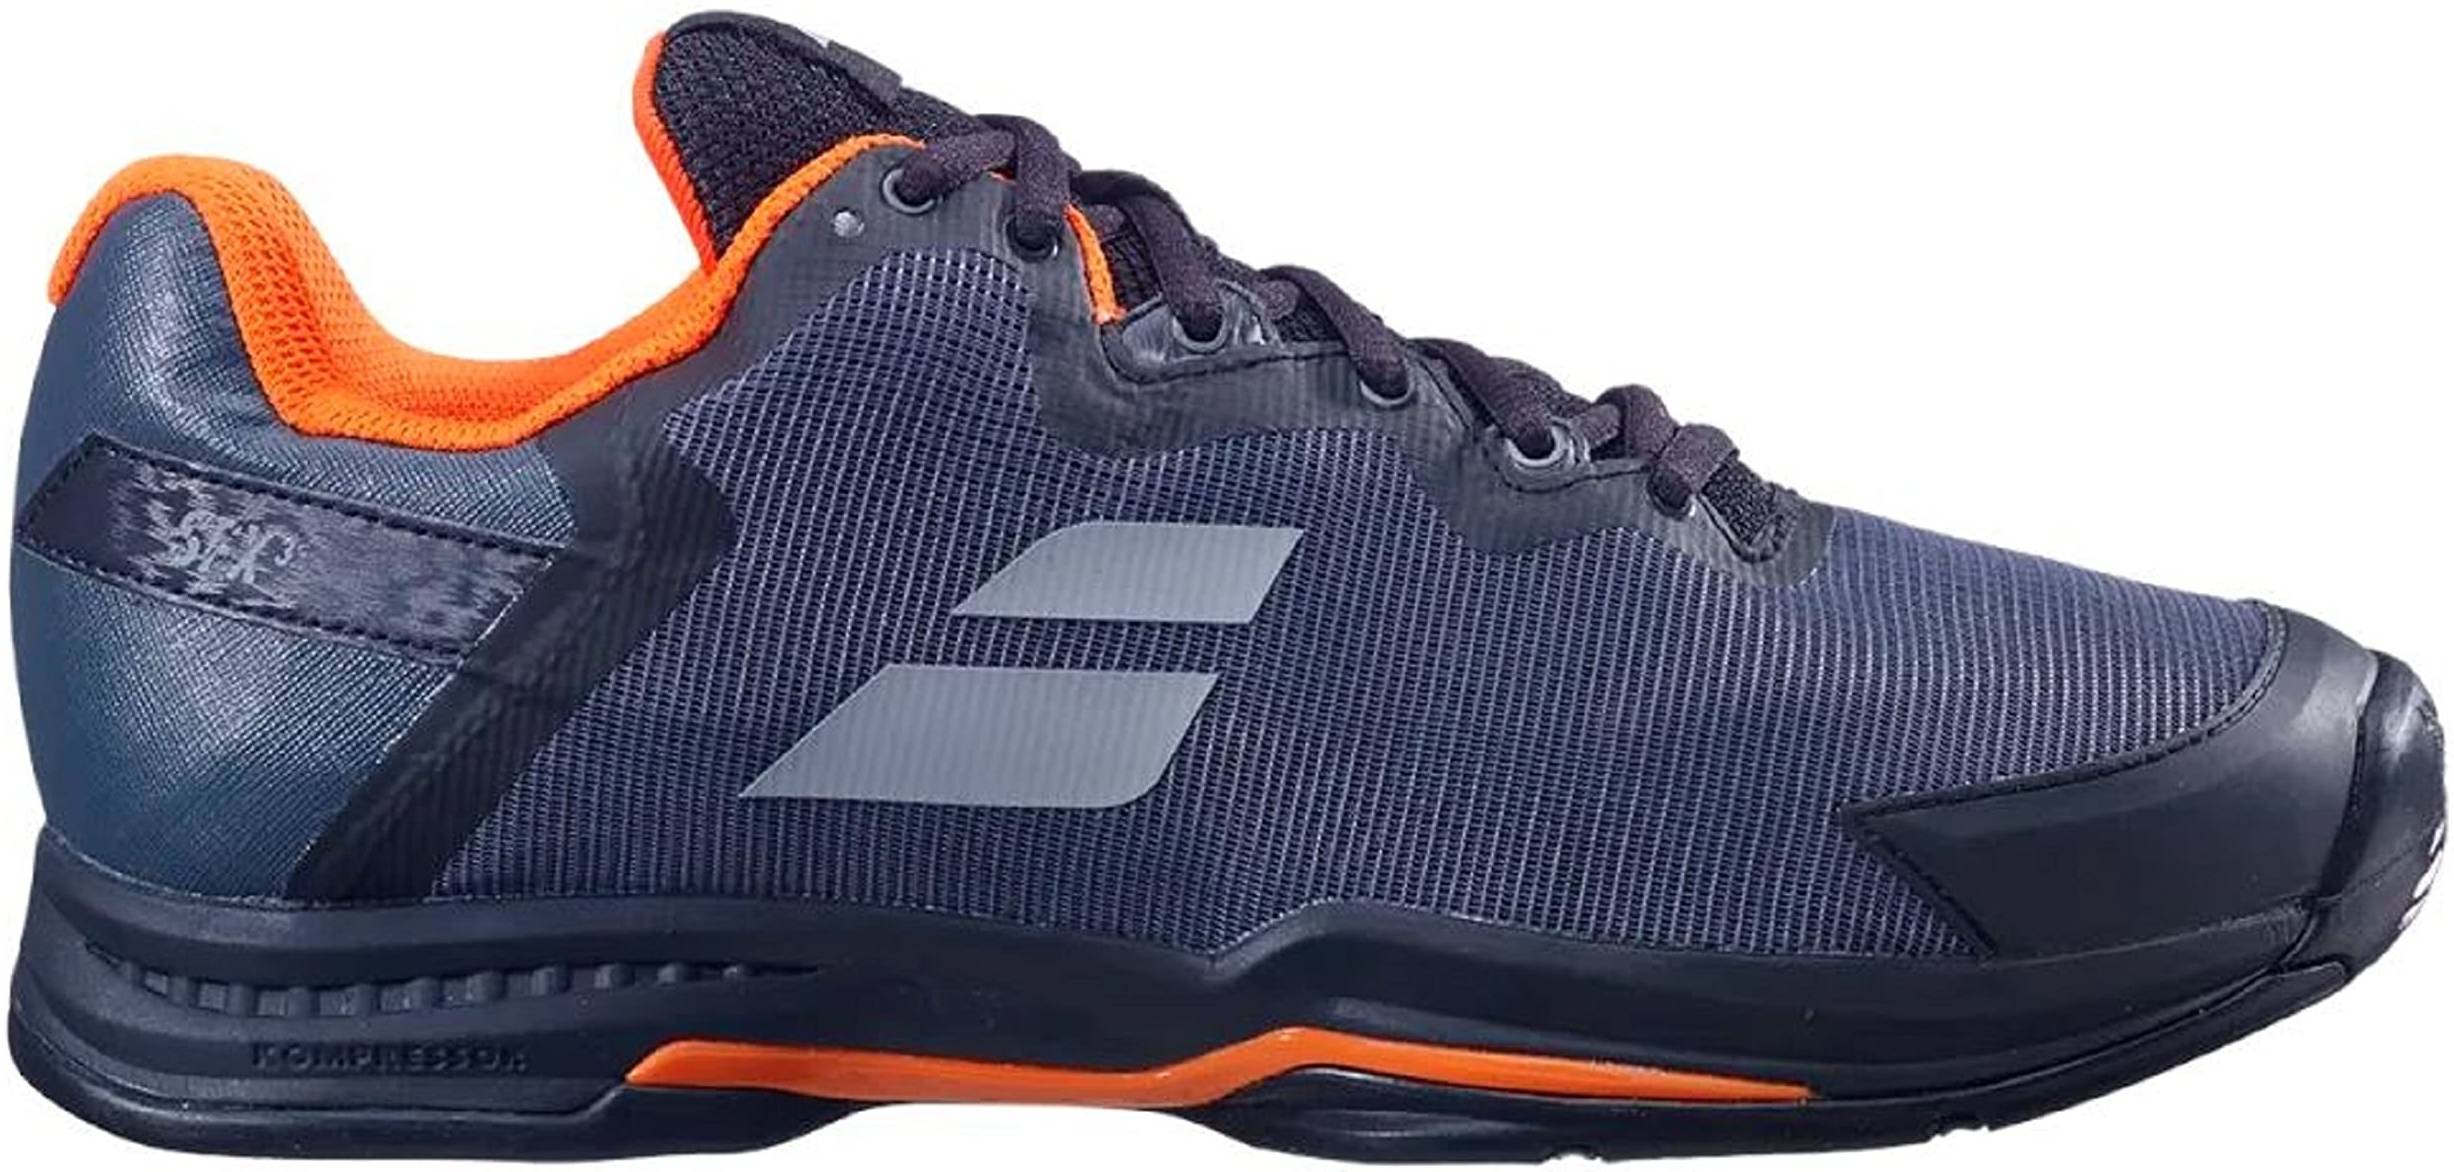 Babolat SFX3 All Court Men's Tennis Shoes Diva Blue Racket Wide Fit 30S18529 